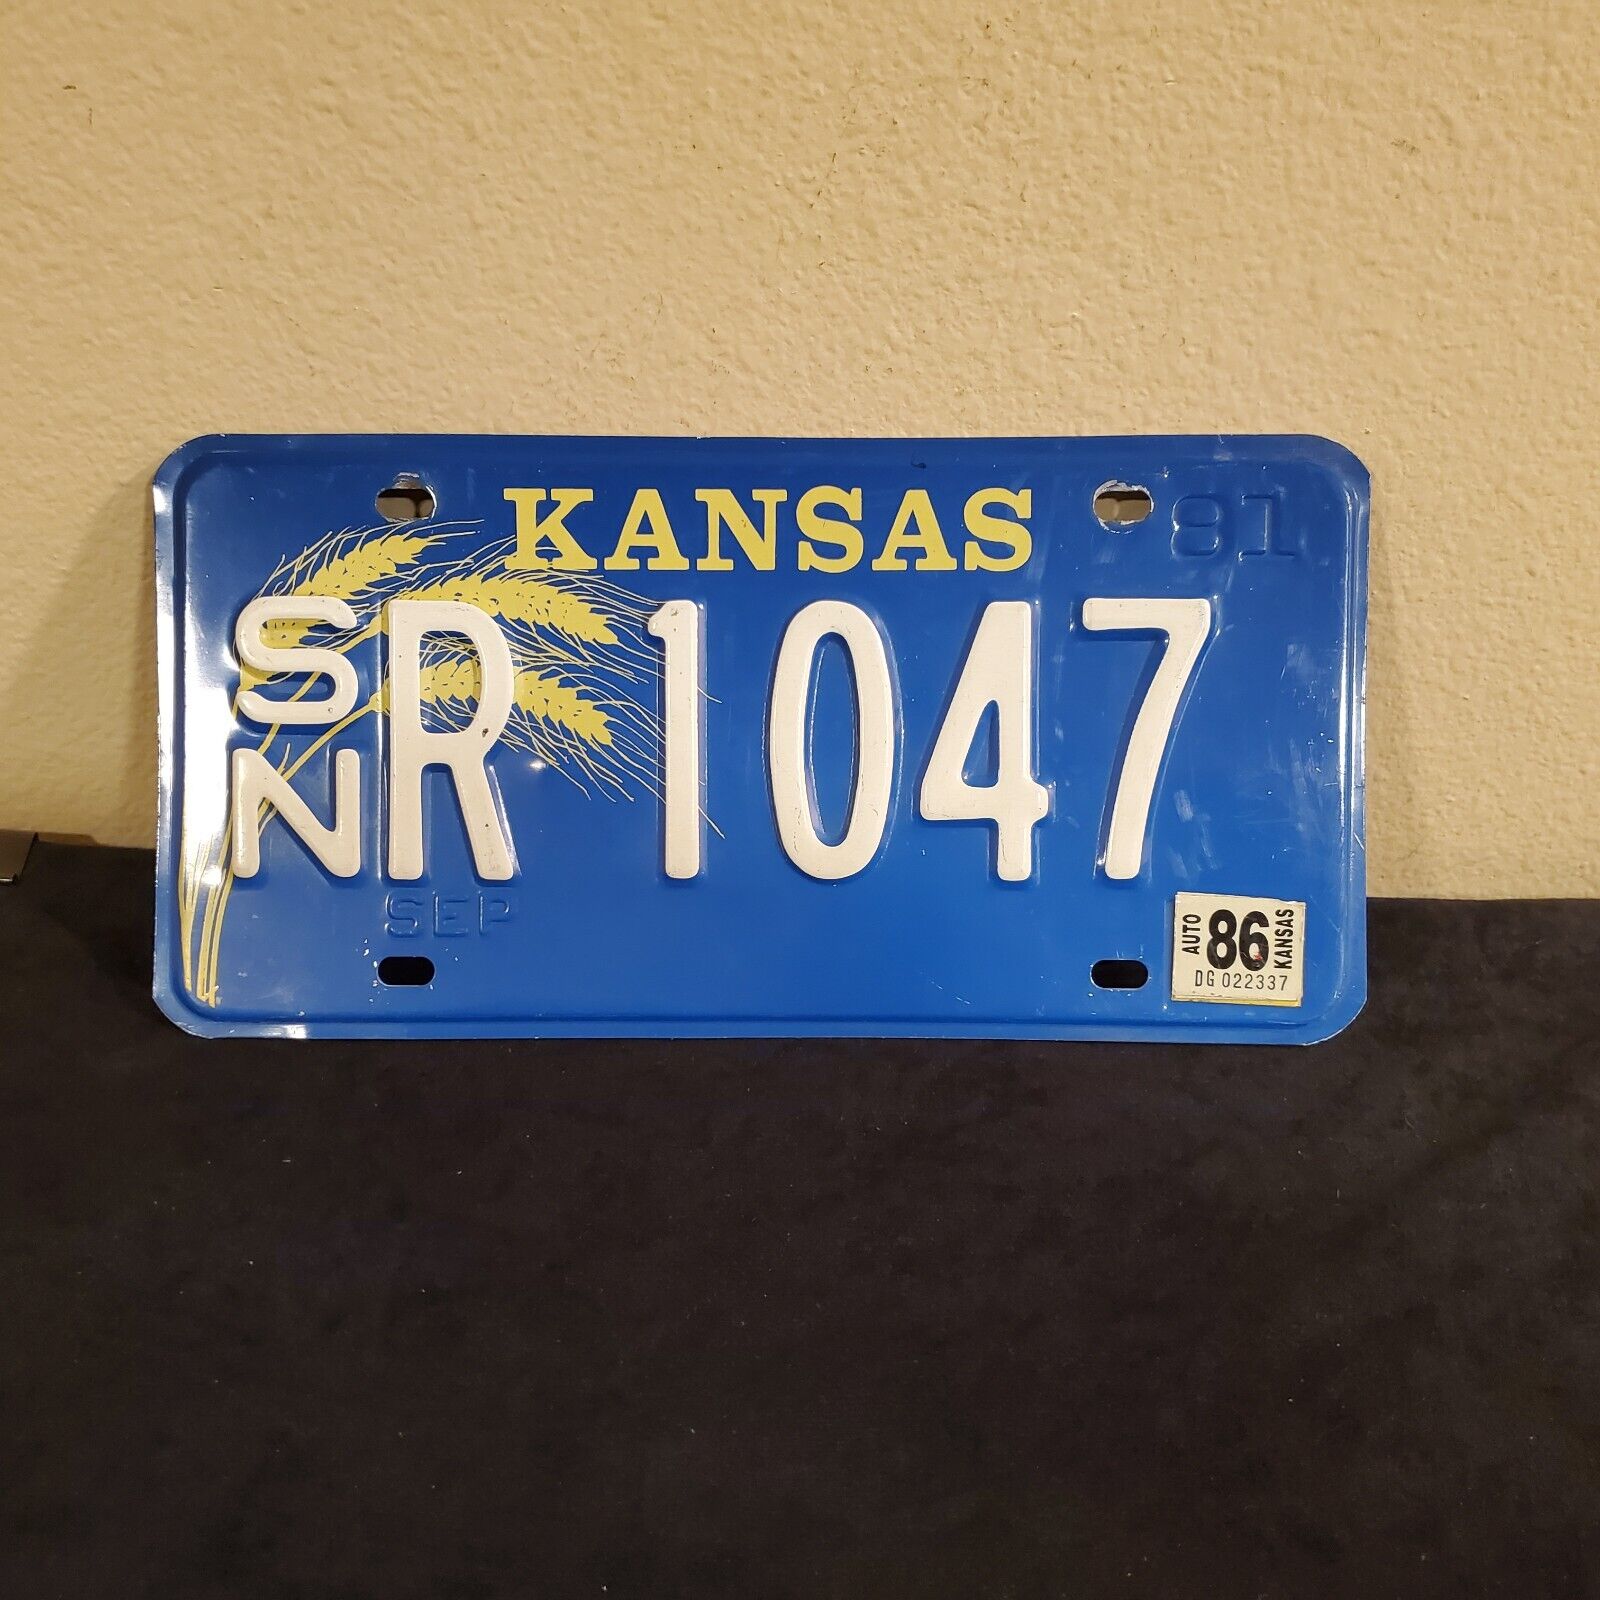 Vintage Kansas Single Plate 1981-86 Snr 1047